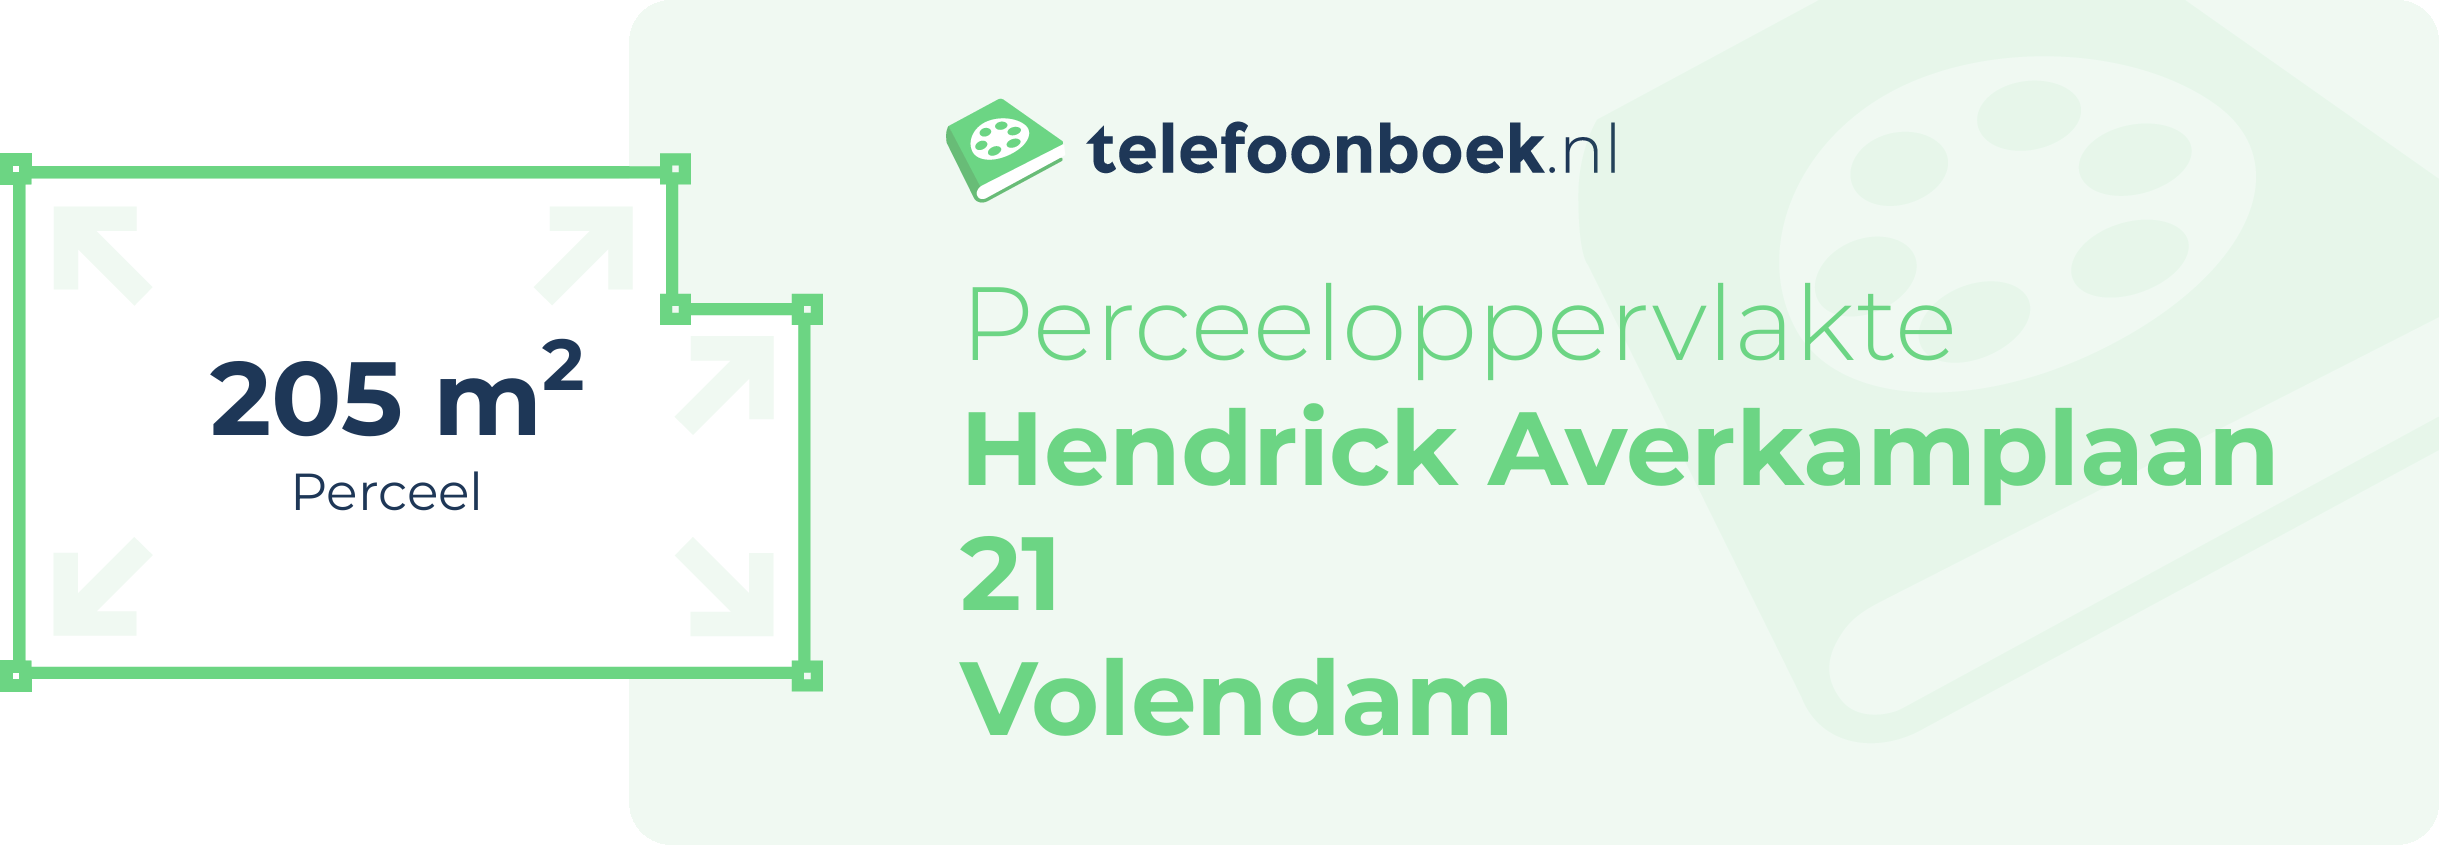 Perceeloppervlakte Hendrick Averkamplaan 21 Volendam